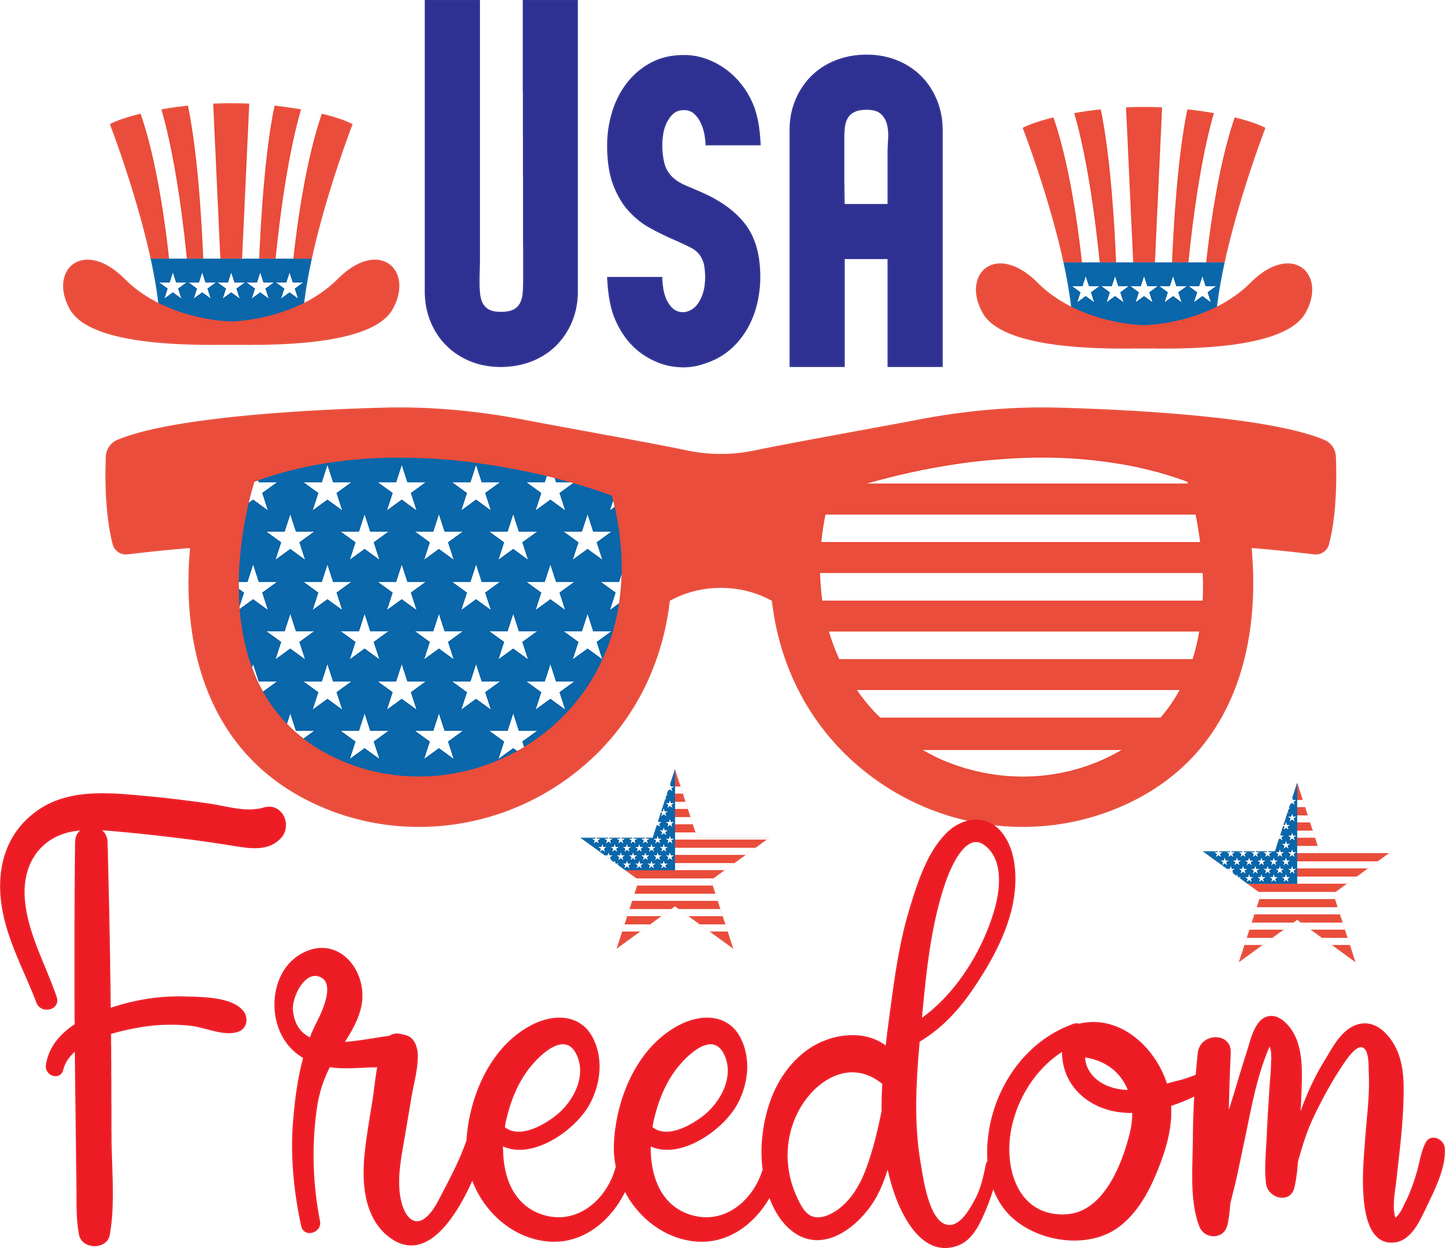 USA Freedom - 1215 Ready to Press DTF Transfer